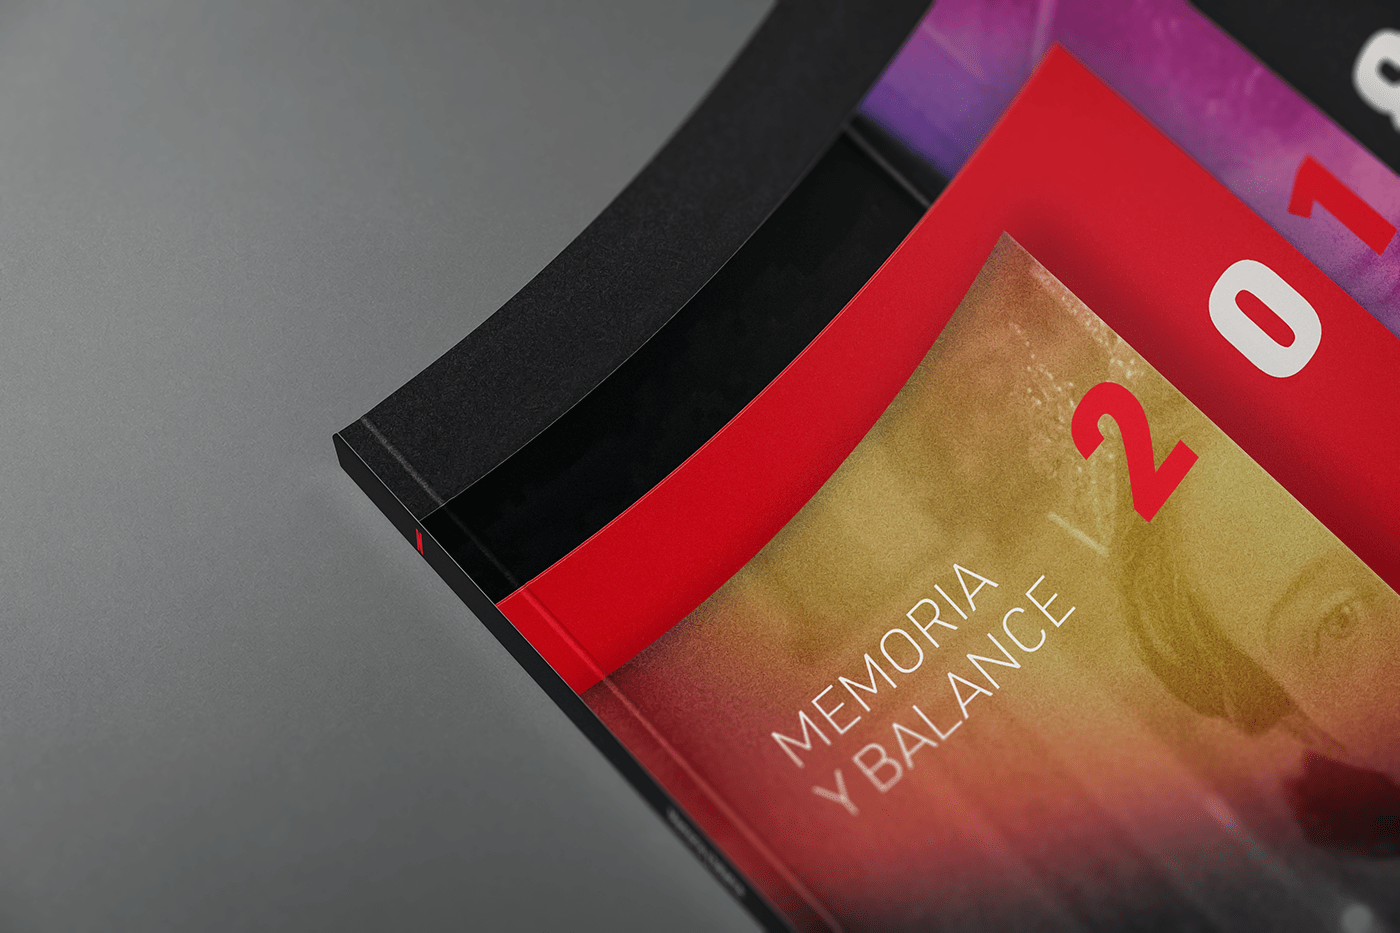 annual report balance memoria editorial design diseño typographic Netflix identity infographic